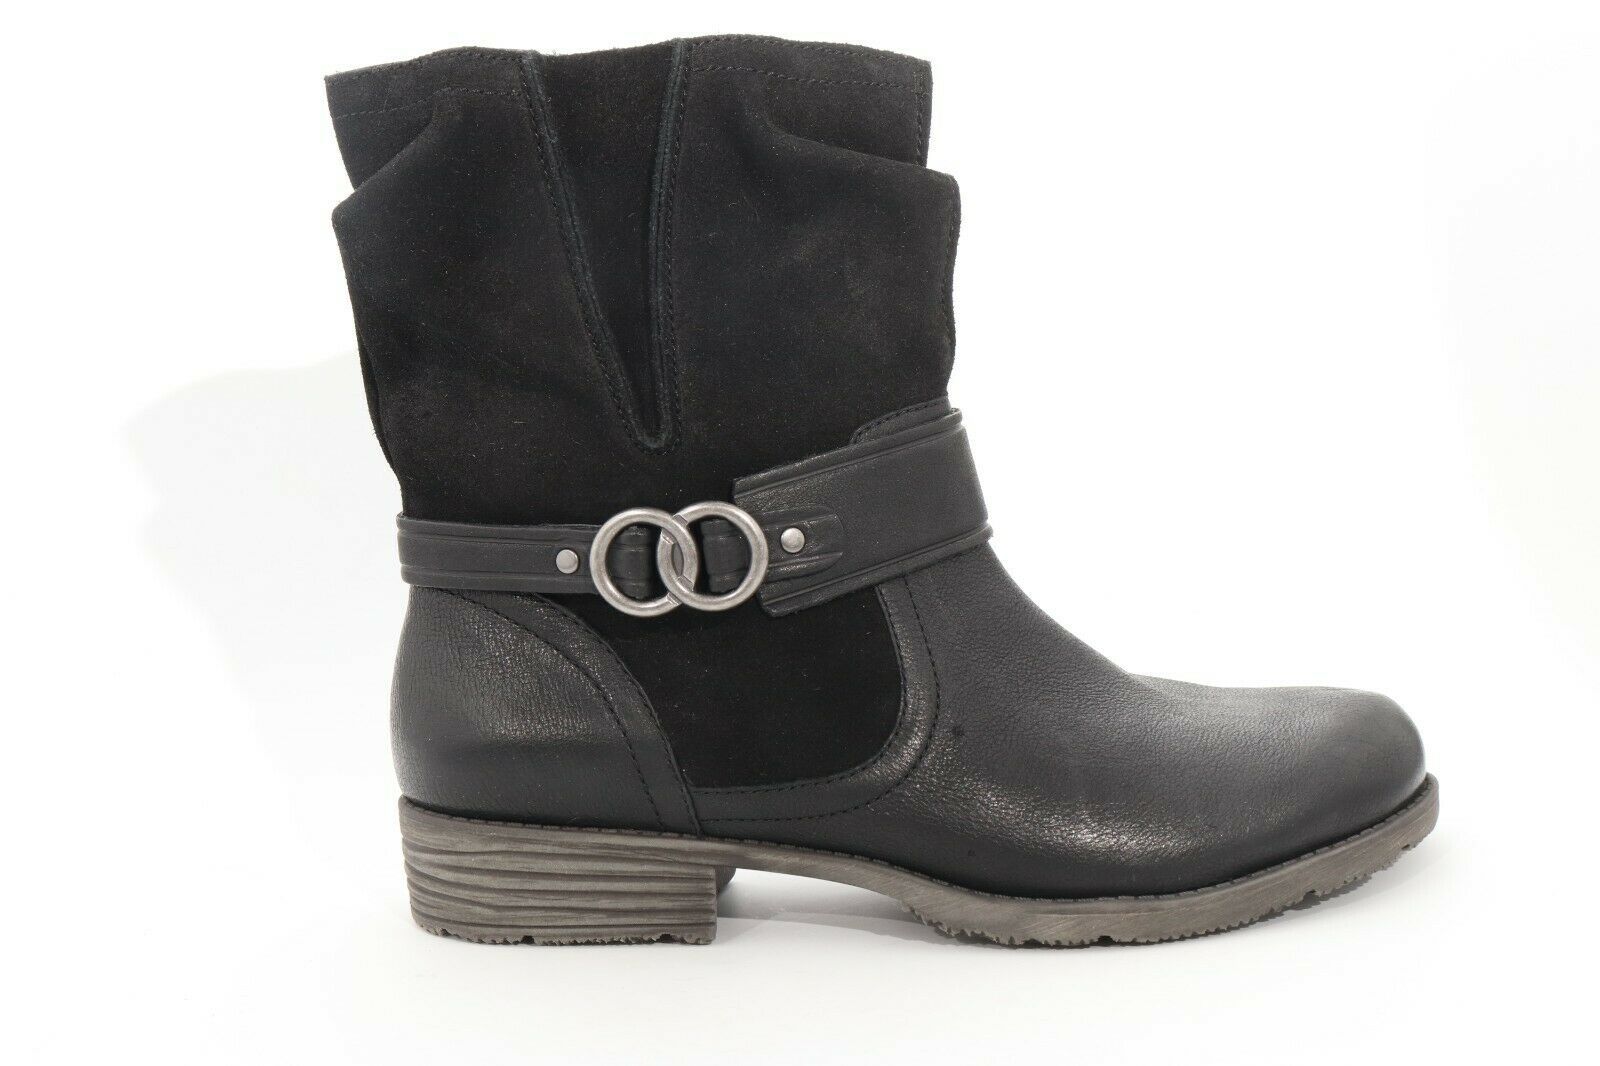 Tara M Hera Boots Black Women's Size US 7.5 () 5550 - Boots